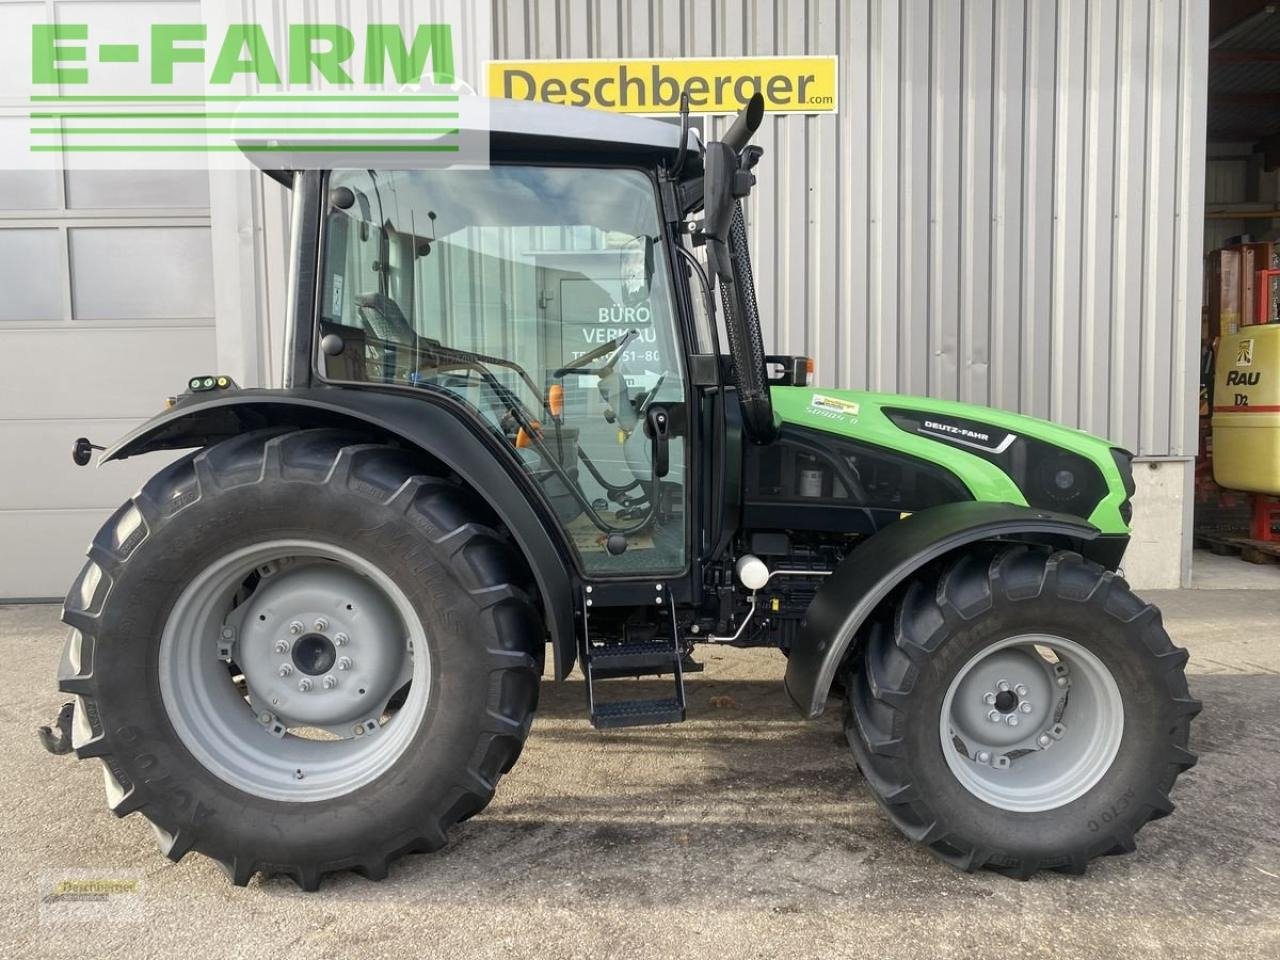 Tractor agricol Deutz-Fahr 5090.4 d: Foto 3